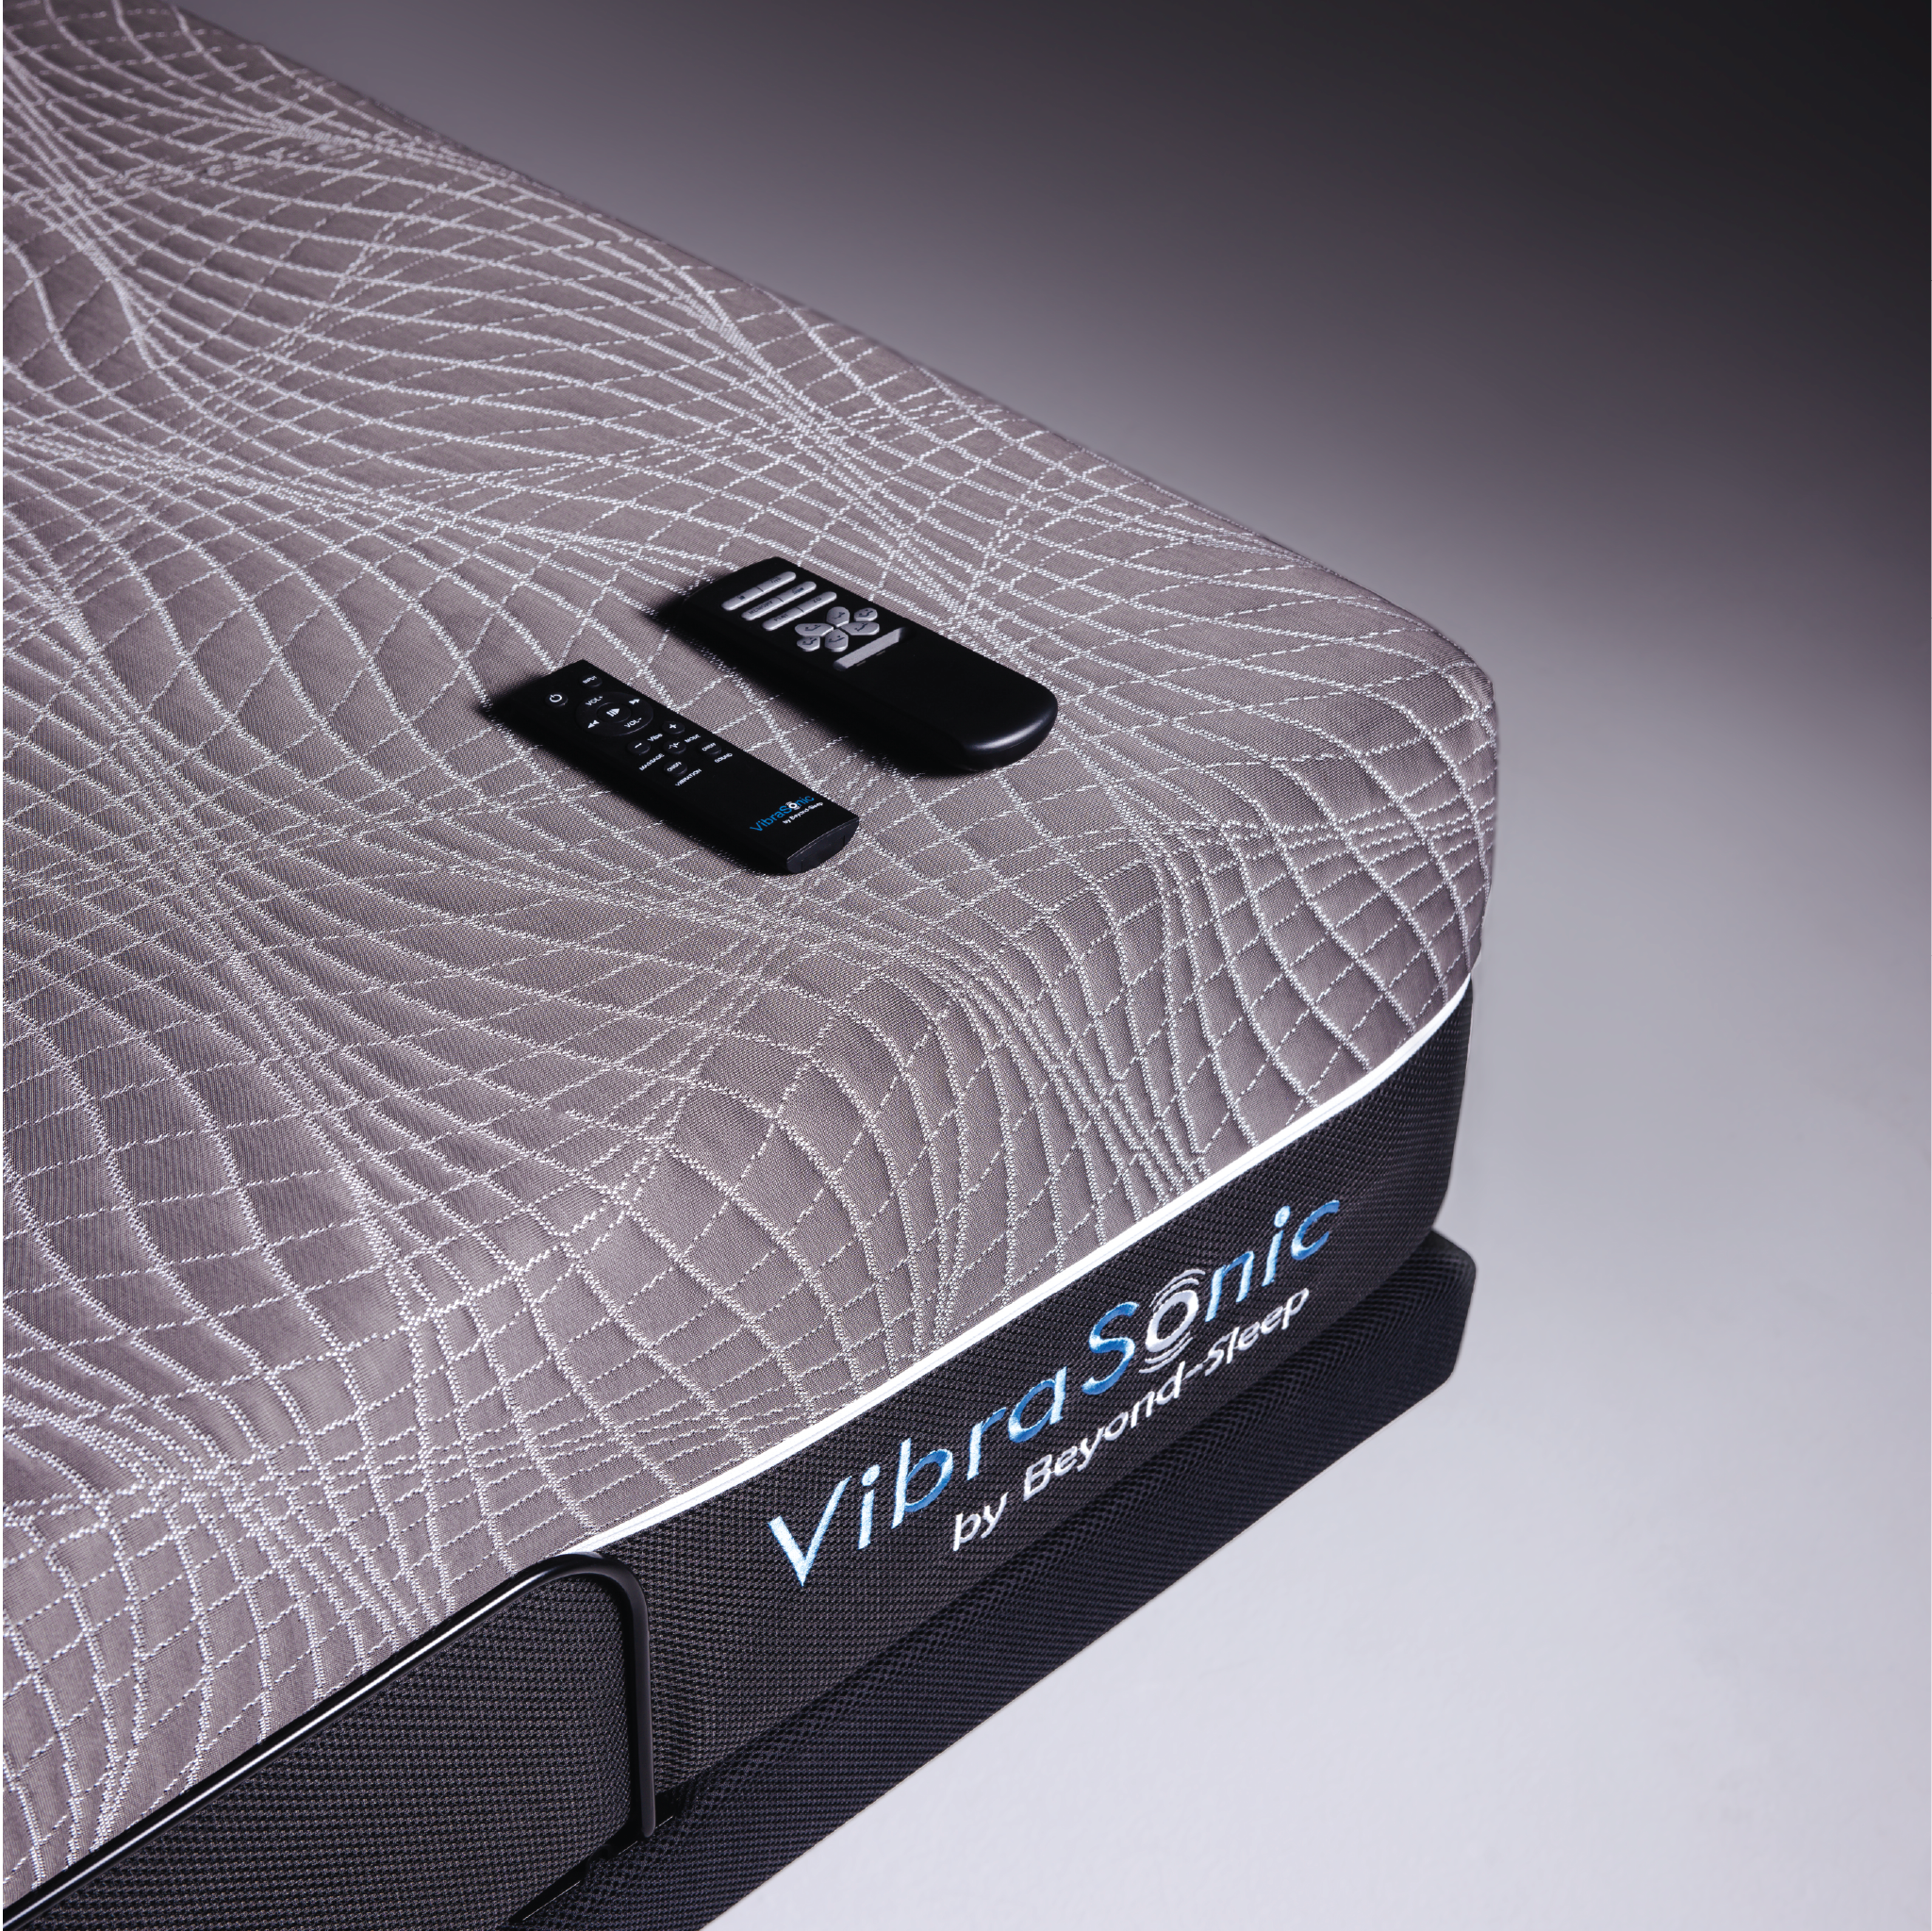 VibraSonic Memory Foam mattress with VibraSonic audio remote and Performance Adjustable base remote. 